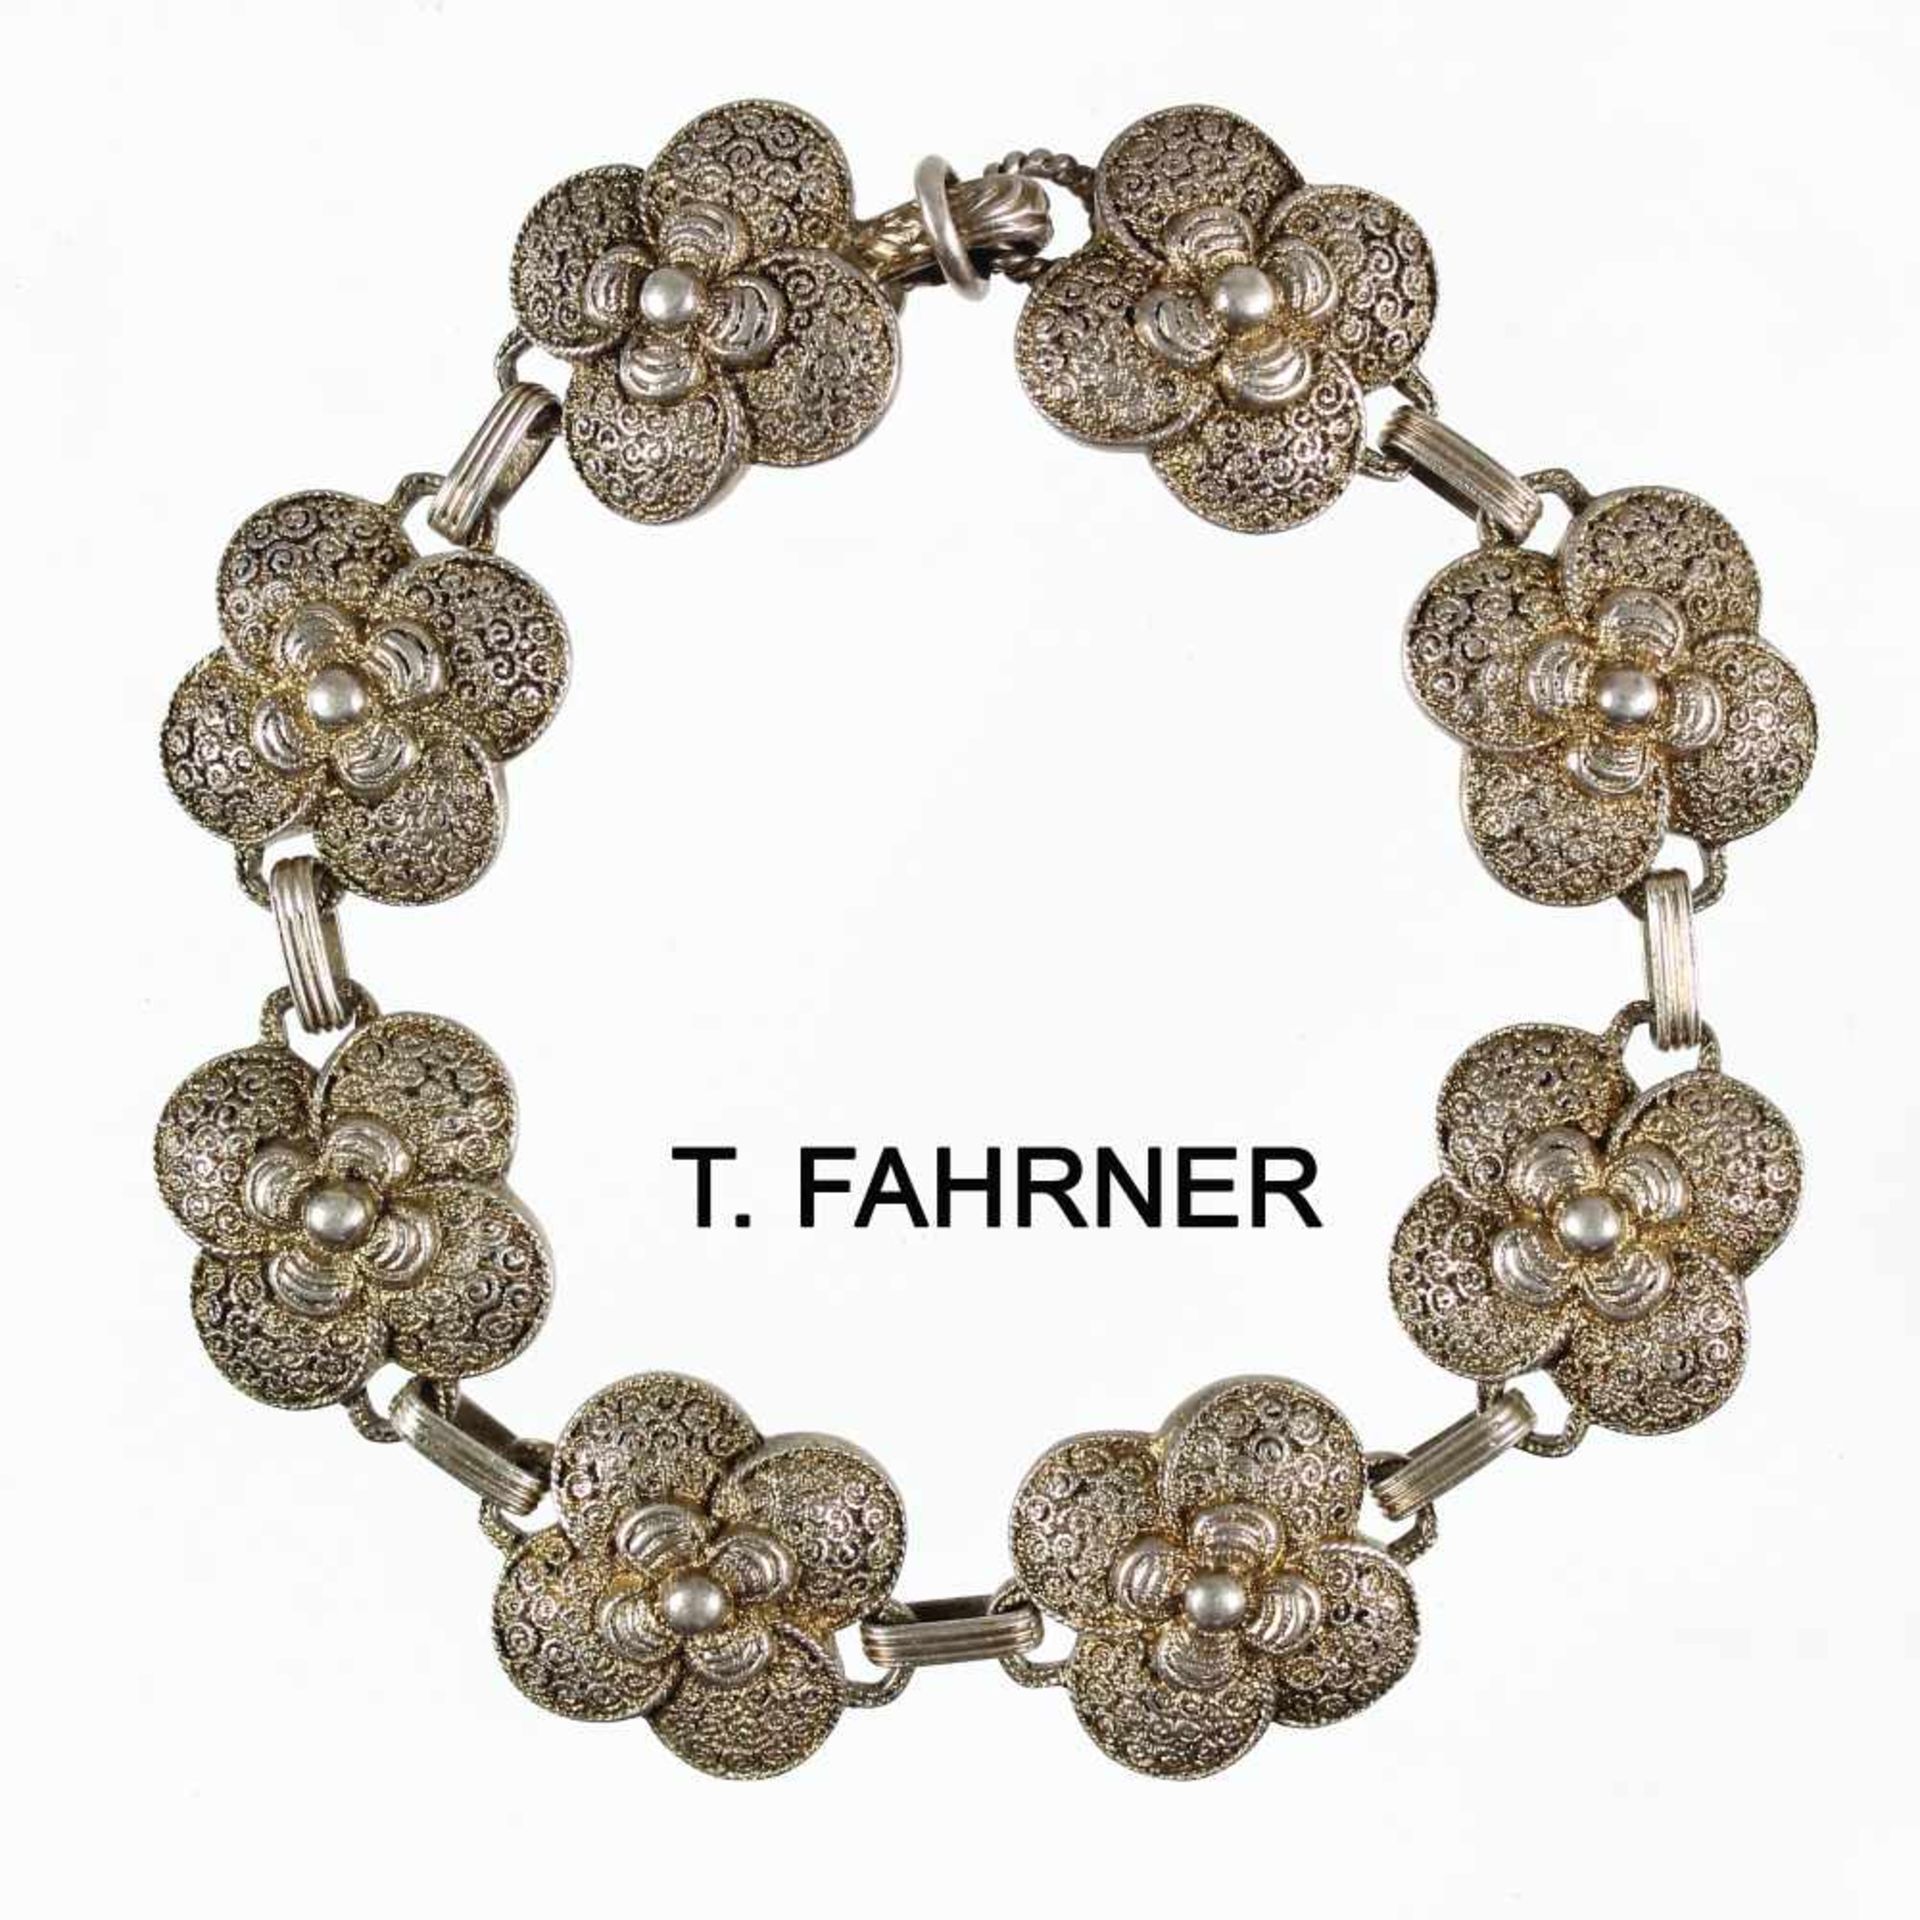 Armband, "THEODOR FAHRNER" Pforzheim der 1930/40er Jahre (Filigranschmuck), Silber 925/000, verg.,